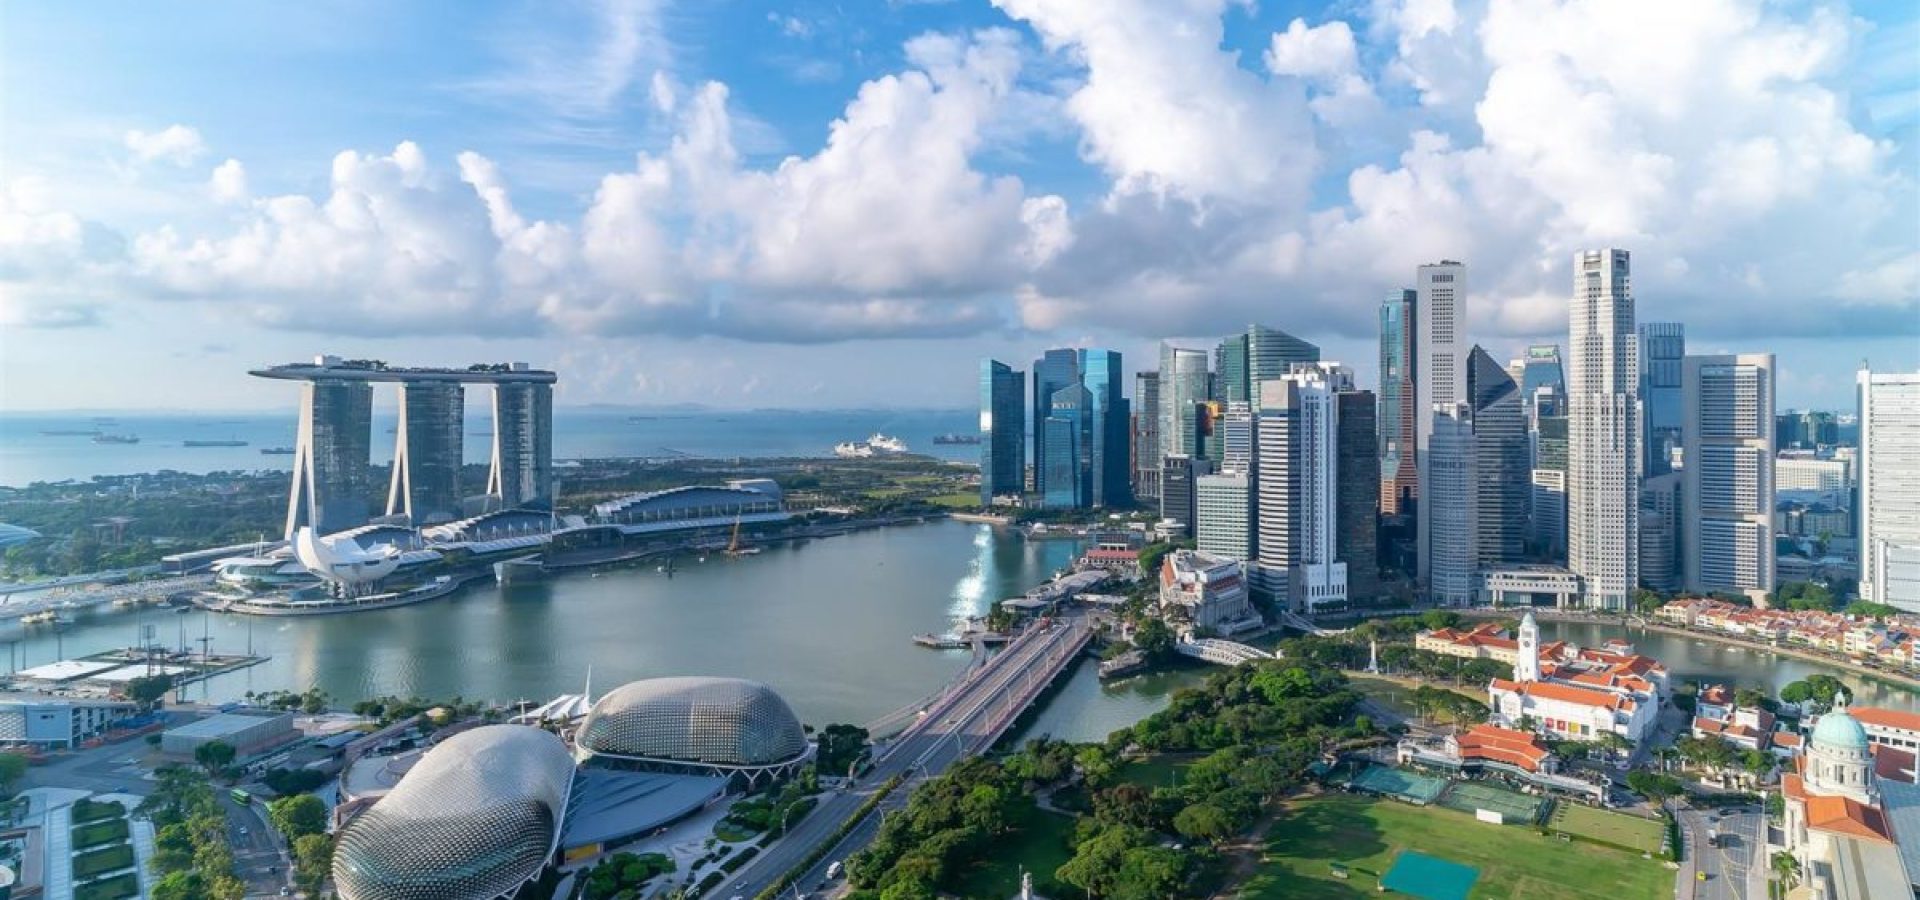 Singapore and its economy